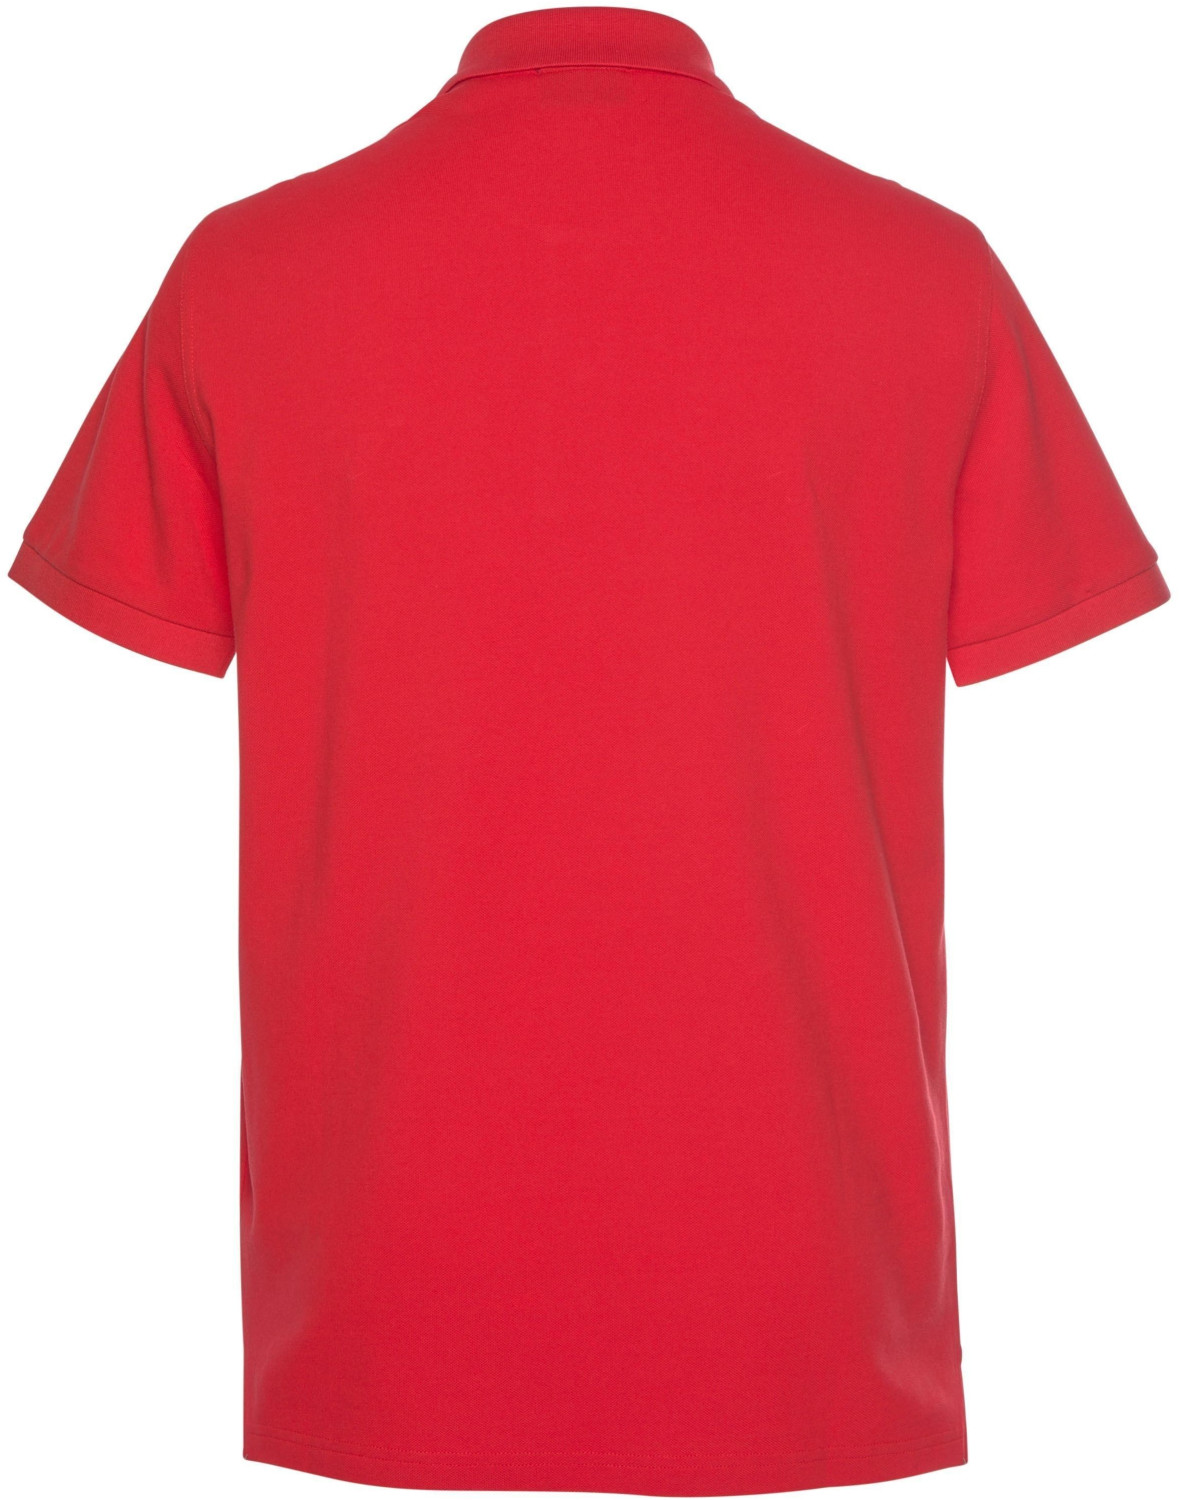 GANT Bestseller Piqué bright | ab Shirt Preisvergleich red (2201) 51,95 Polo bei €